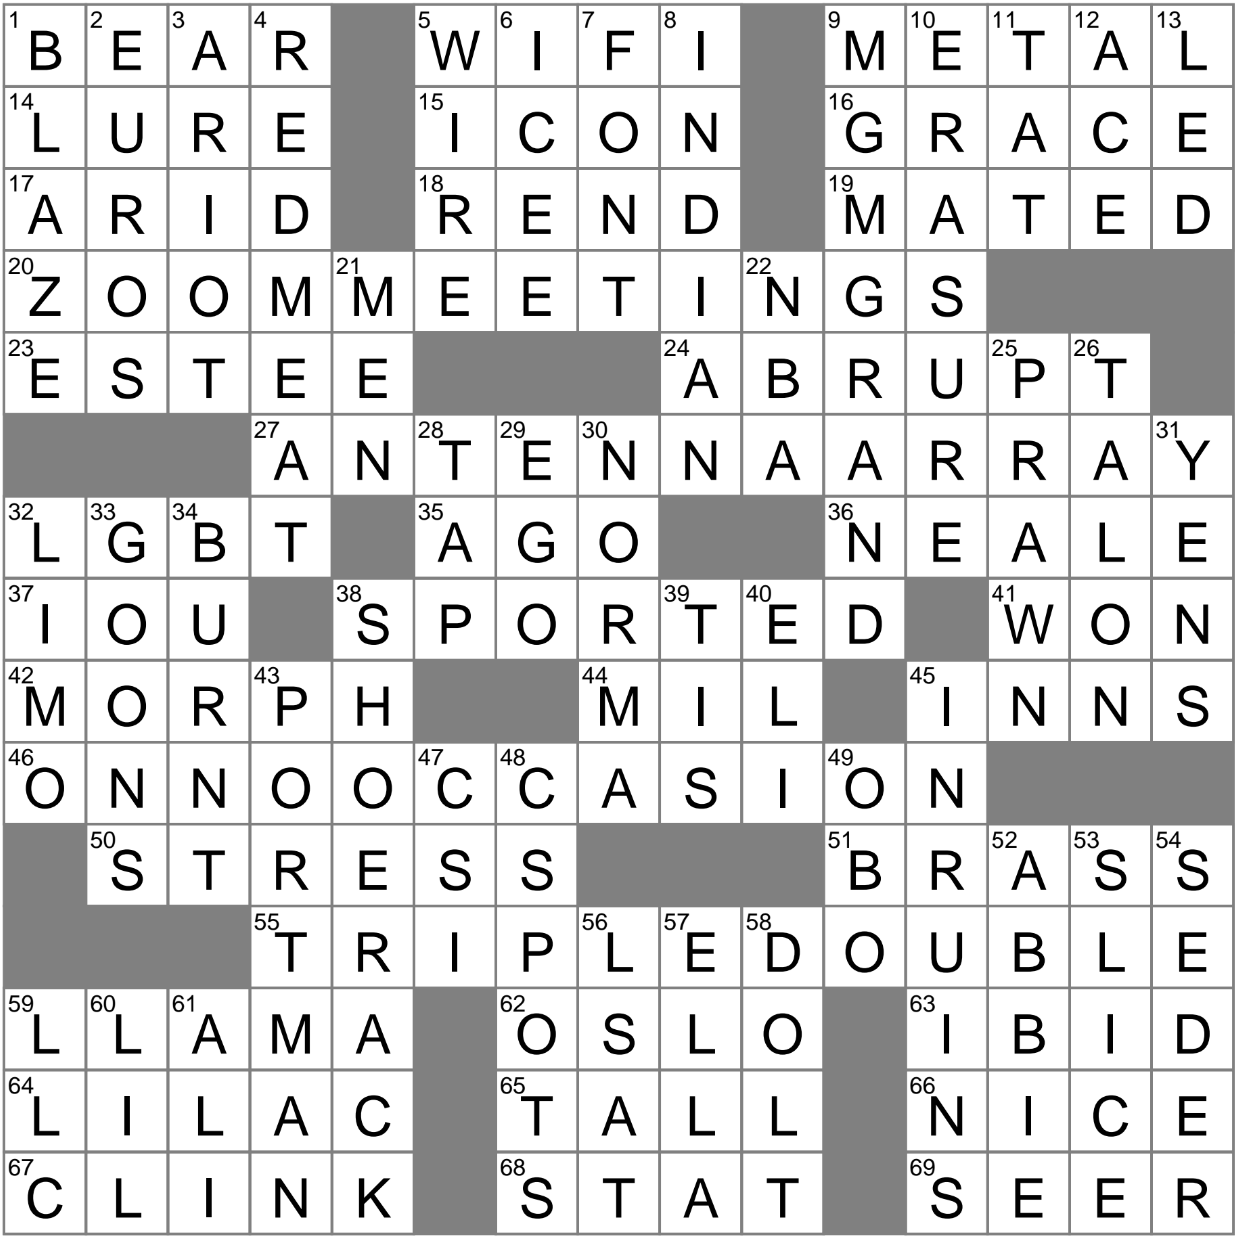 LA Times Crossword 10 Apr 23 Monday LAXCrossword com